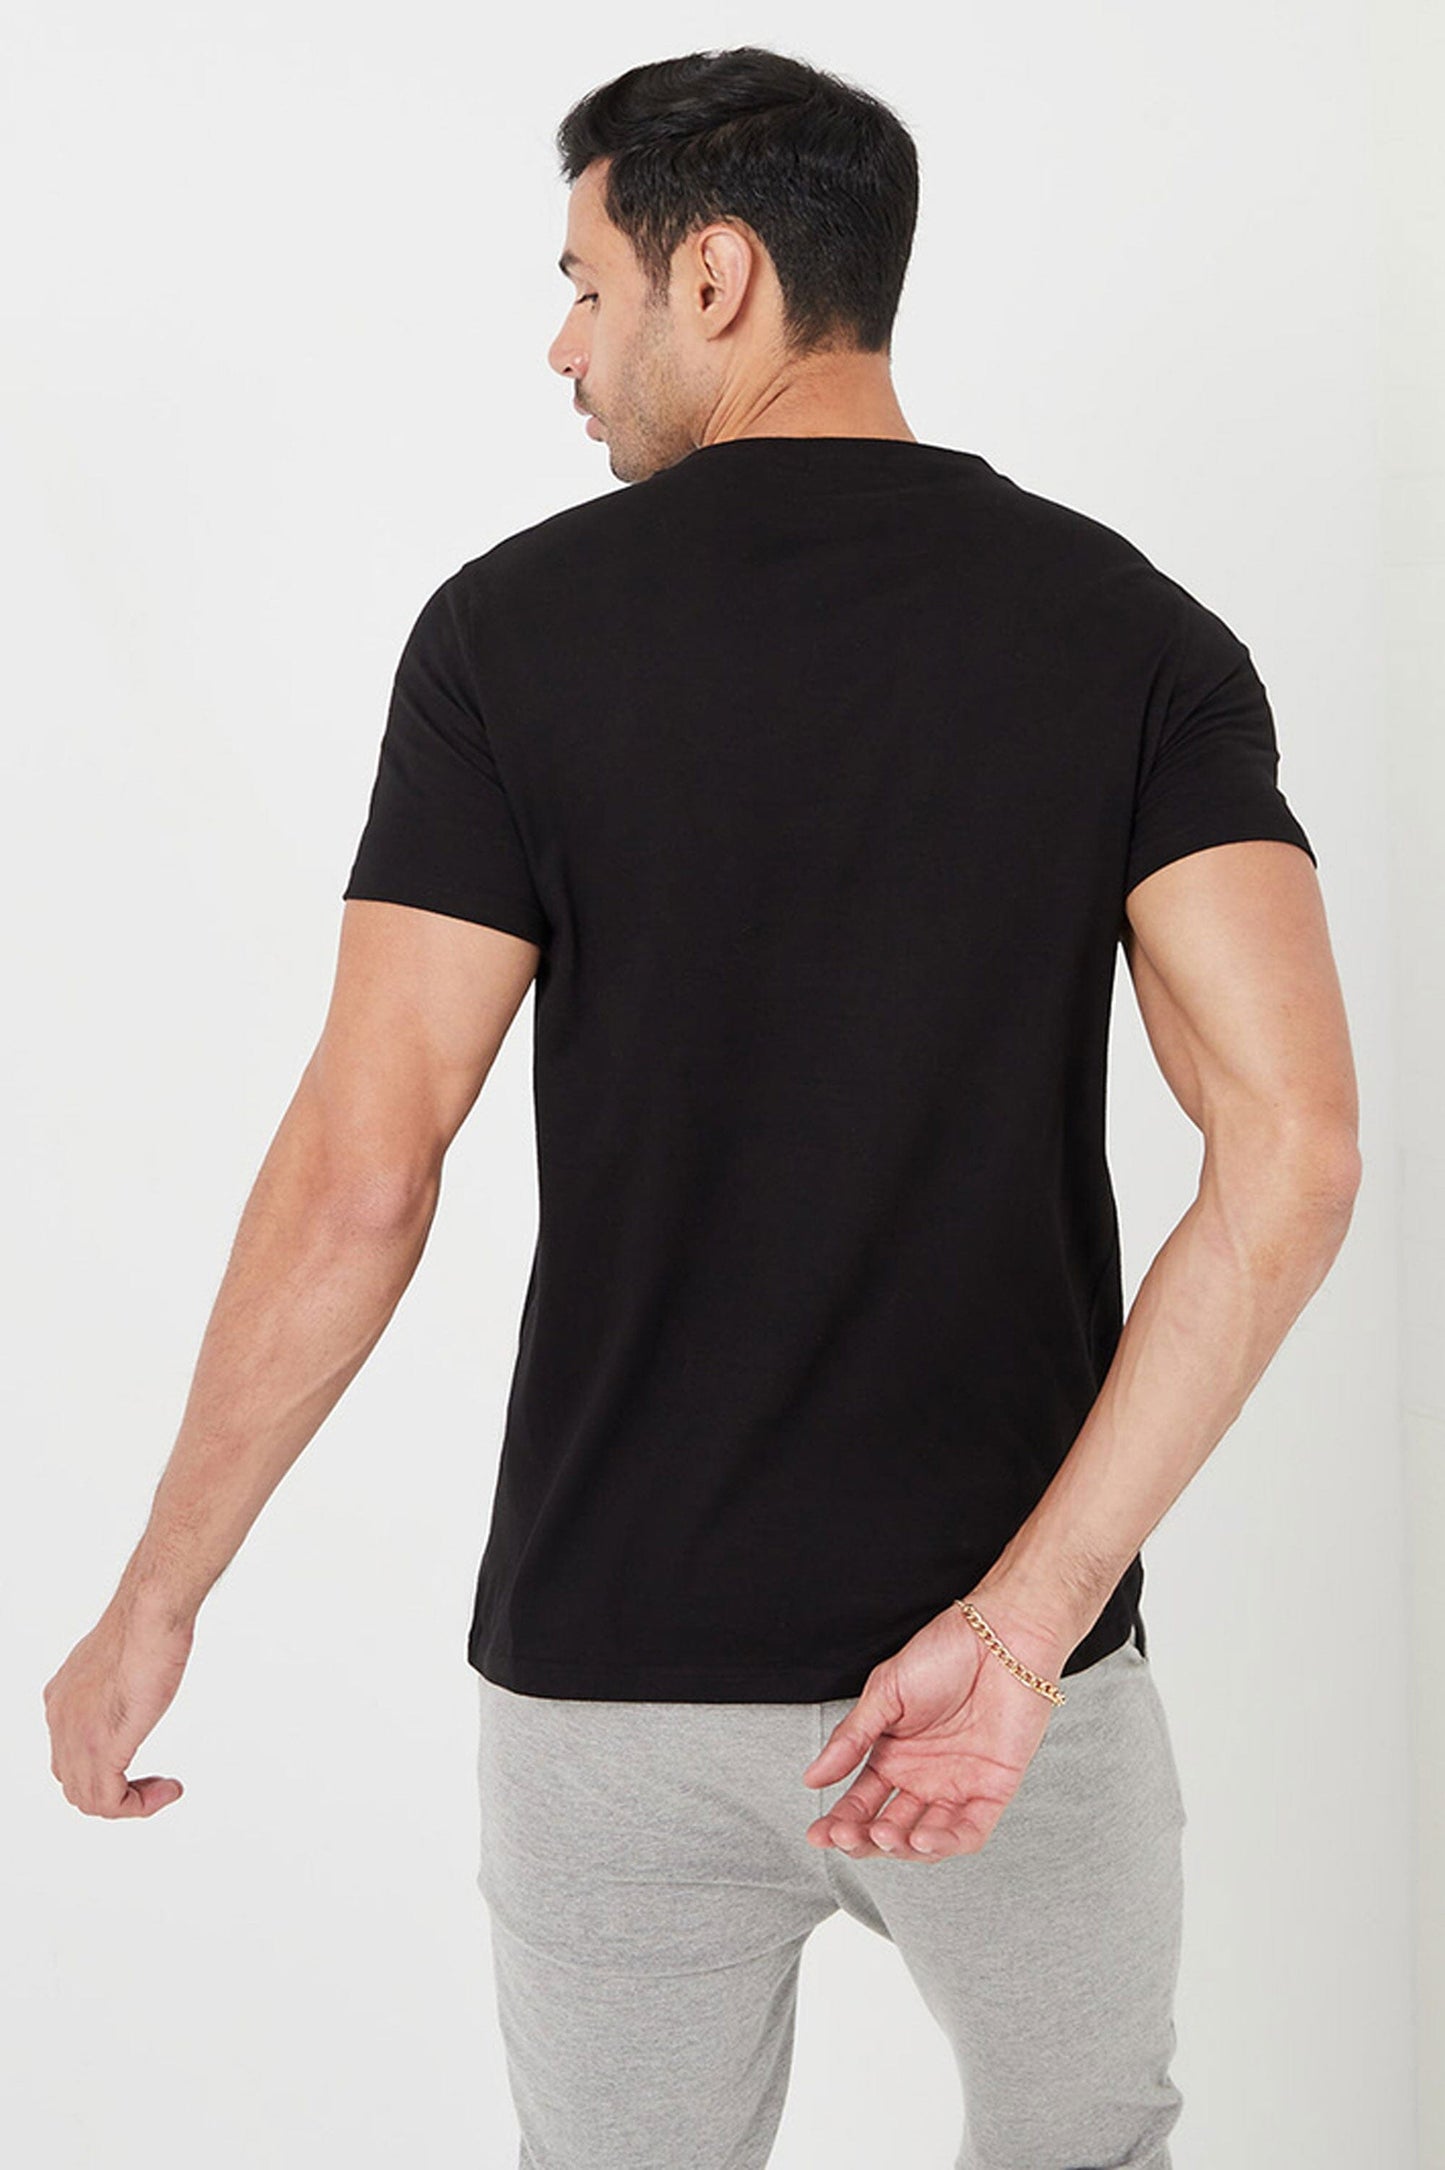 Fevlo Men's Palermo Solid Design Short Sleeve Tee Shirt